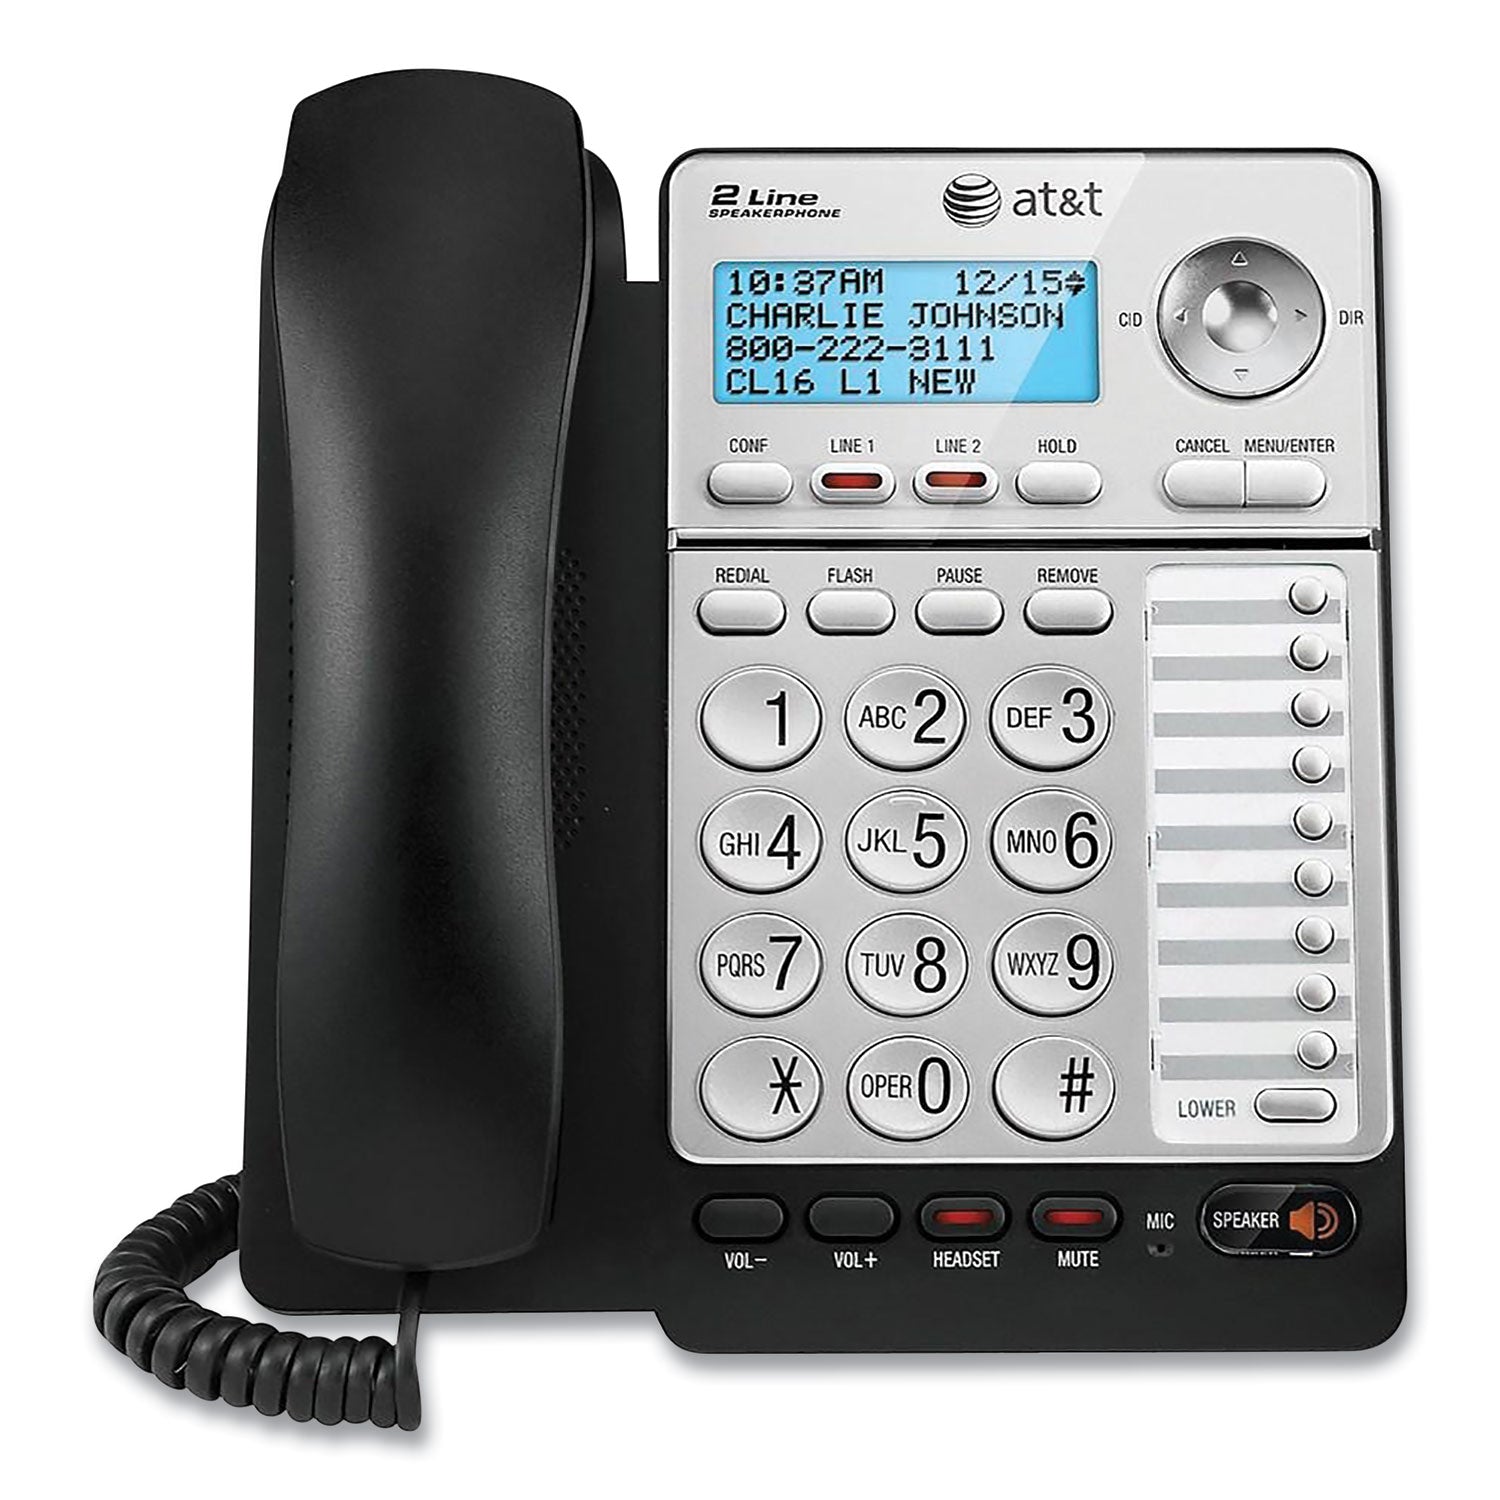 ml17928-two-line-corded-speakerphone-black-silver_attml17928 - 1